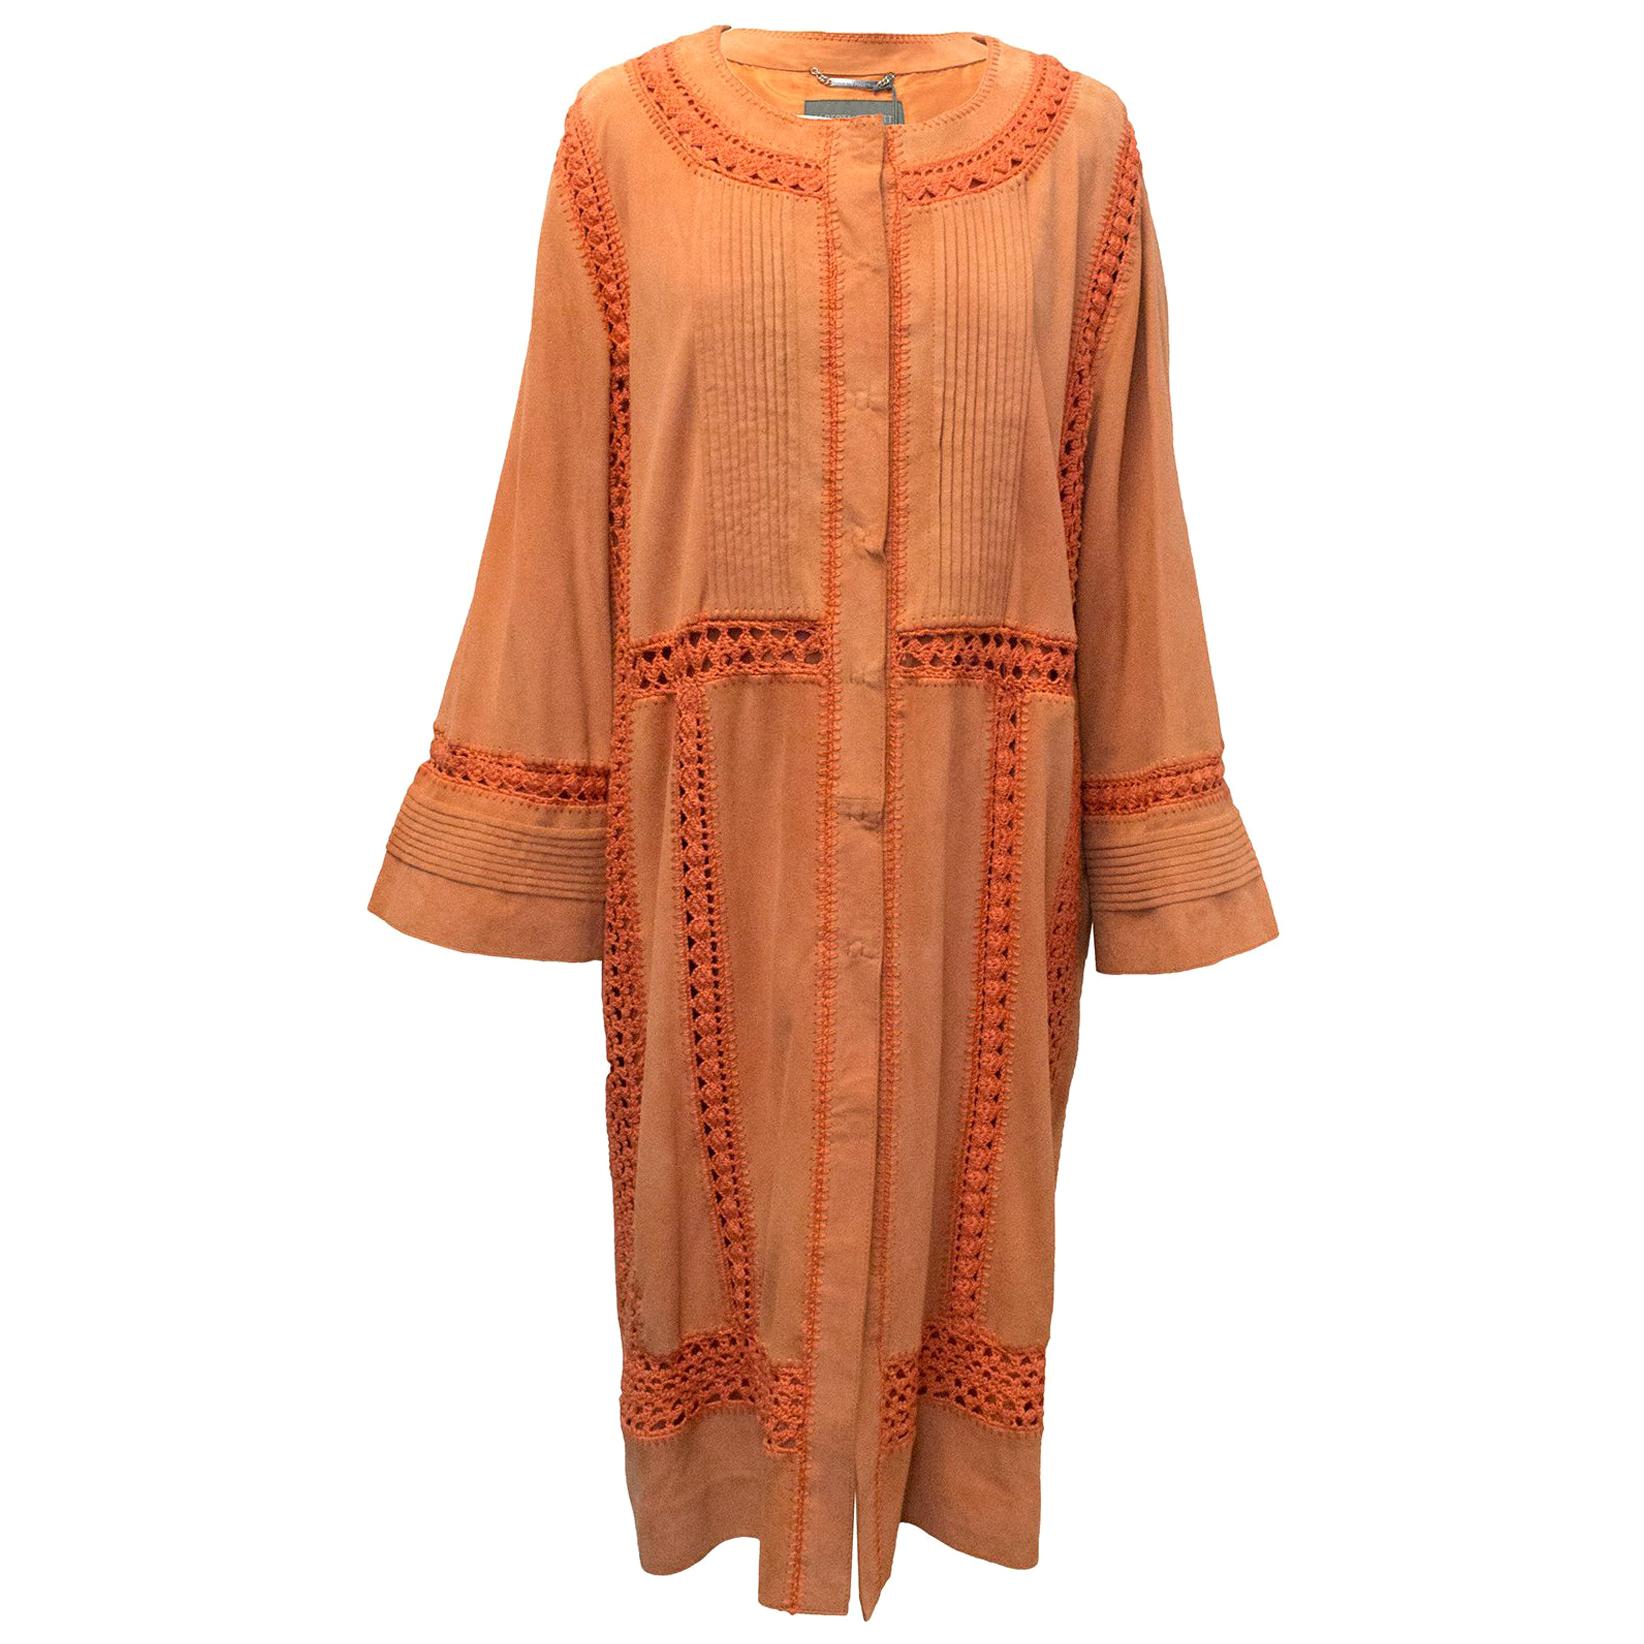 Alberta Ferretti Orange Suede & Crochet Coat - Size US 6